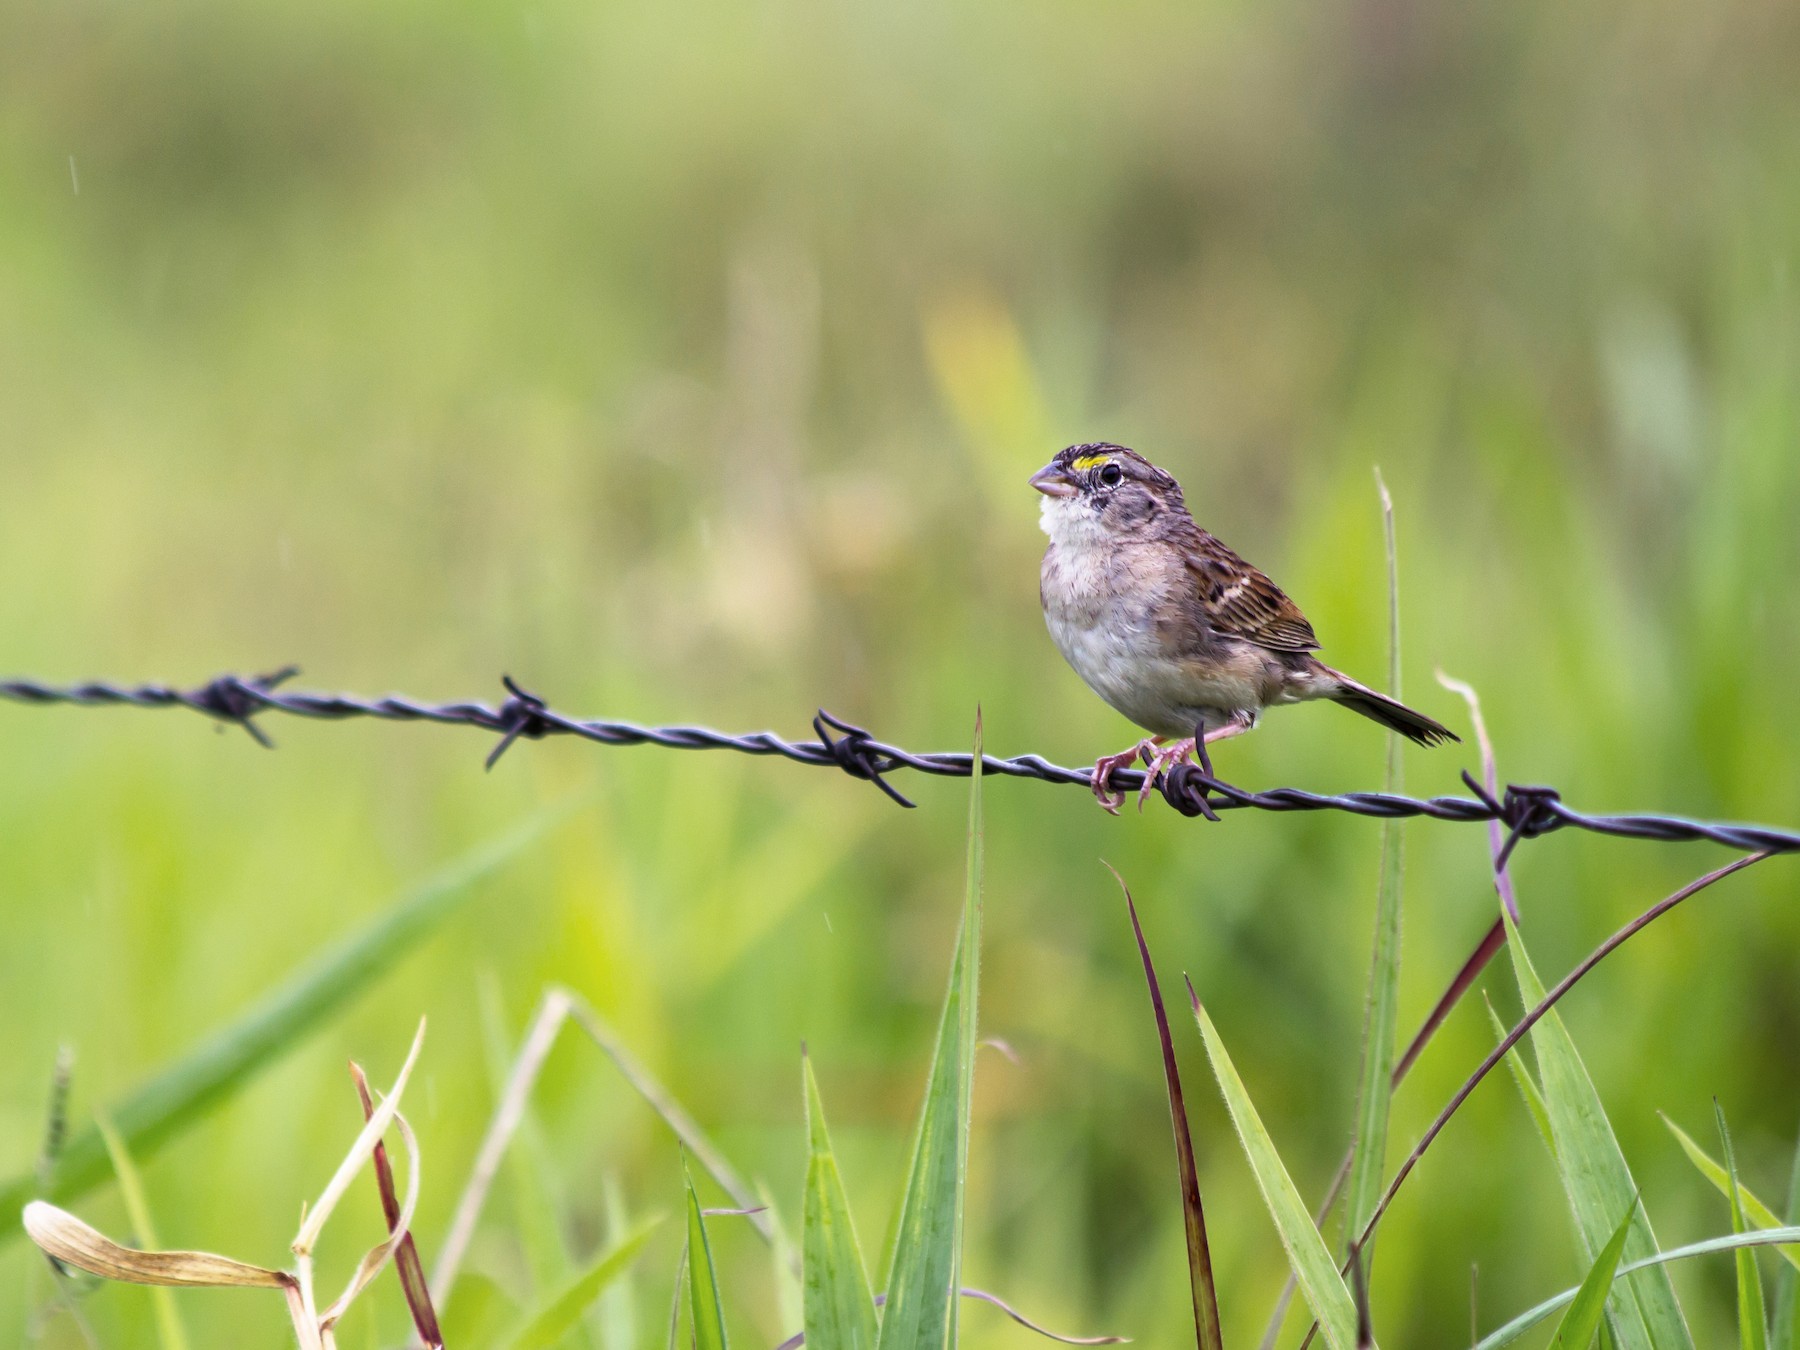 Grassland Sparrow - André  Zambolli